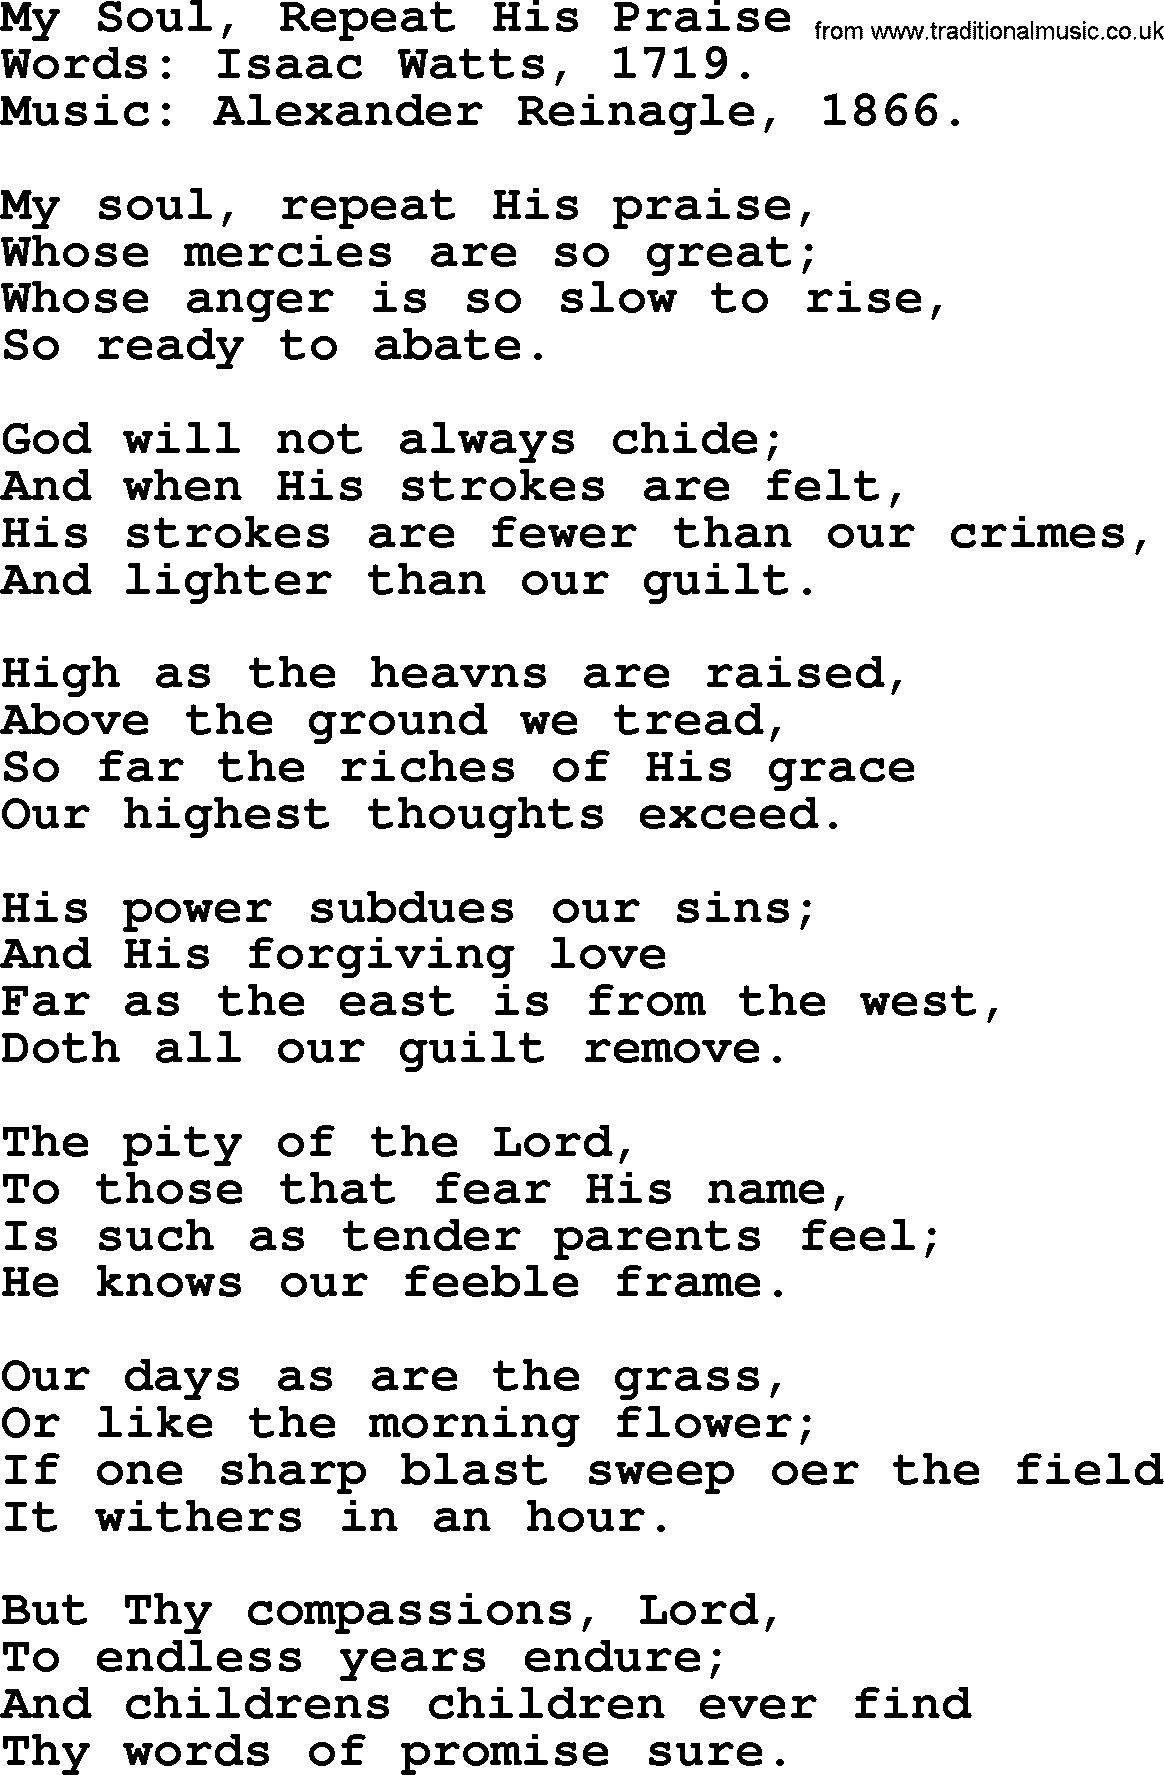 Isaac Watts Christian hymn: My Soul, Repeat His Praise- lyricss